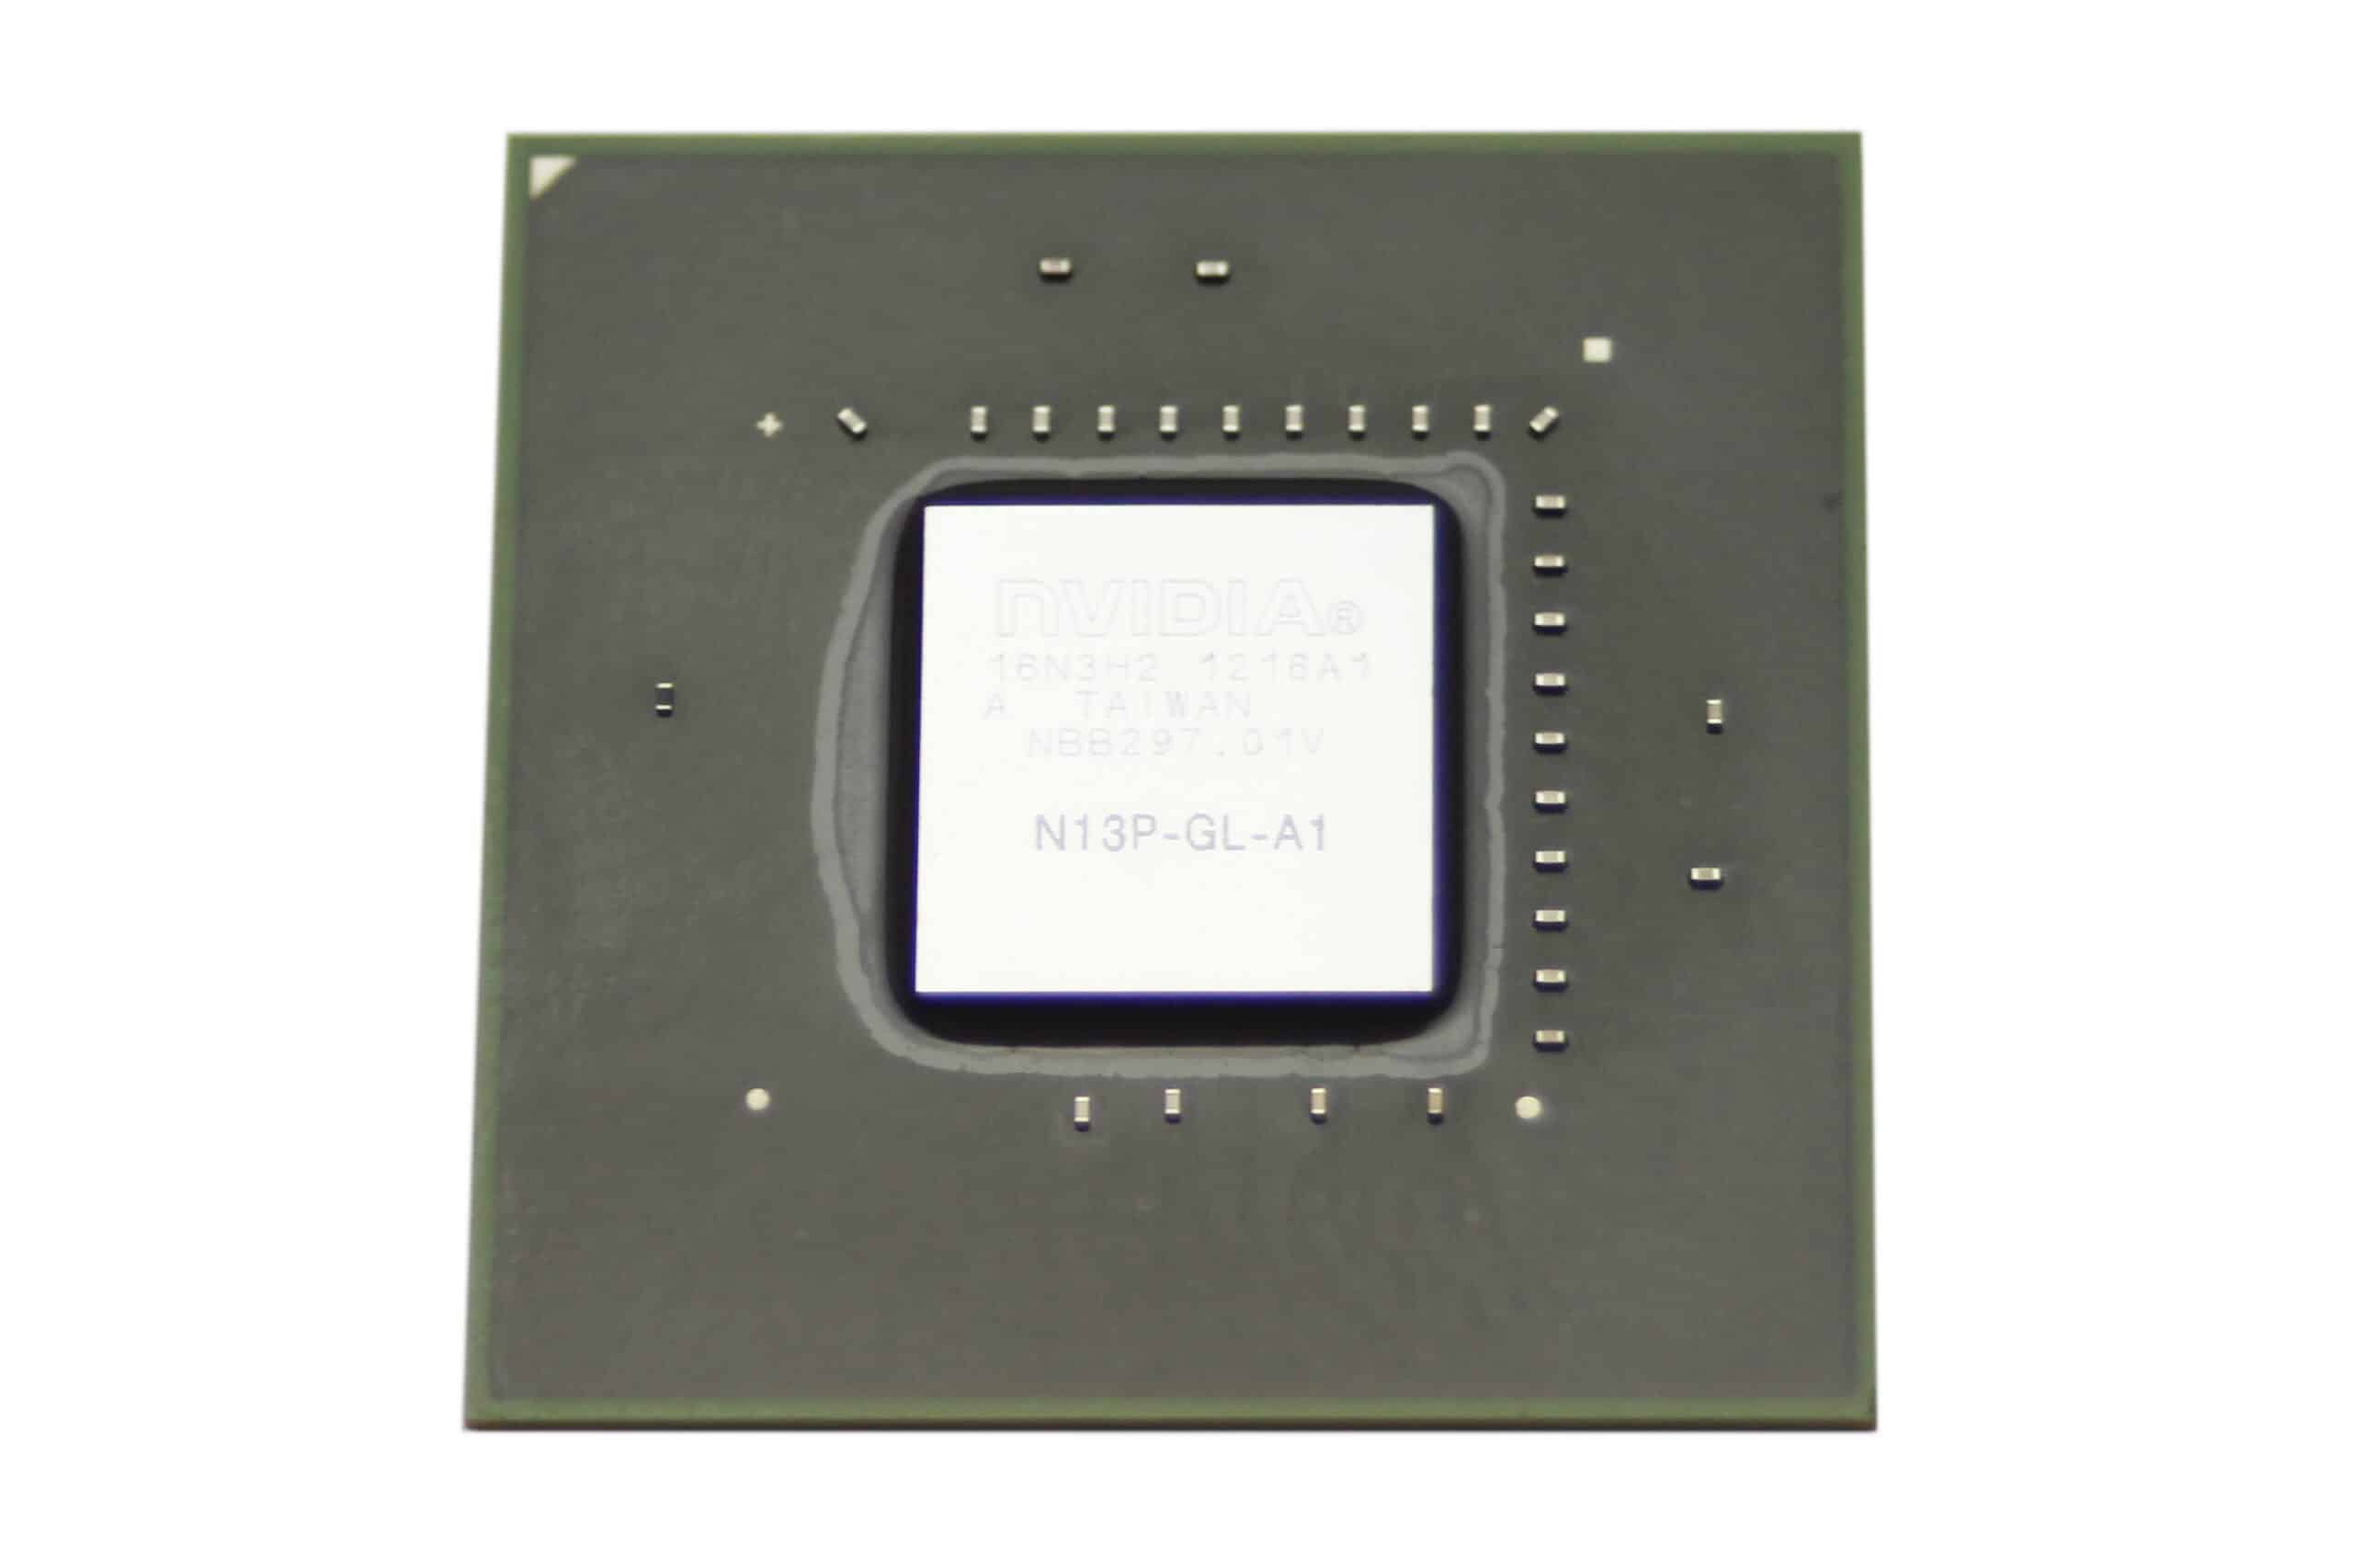 Intel 6 series chipset. Видеочип NVIDIA n13p-gl2-a1. Чипы NVIDIA С металлической крышкой.